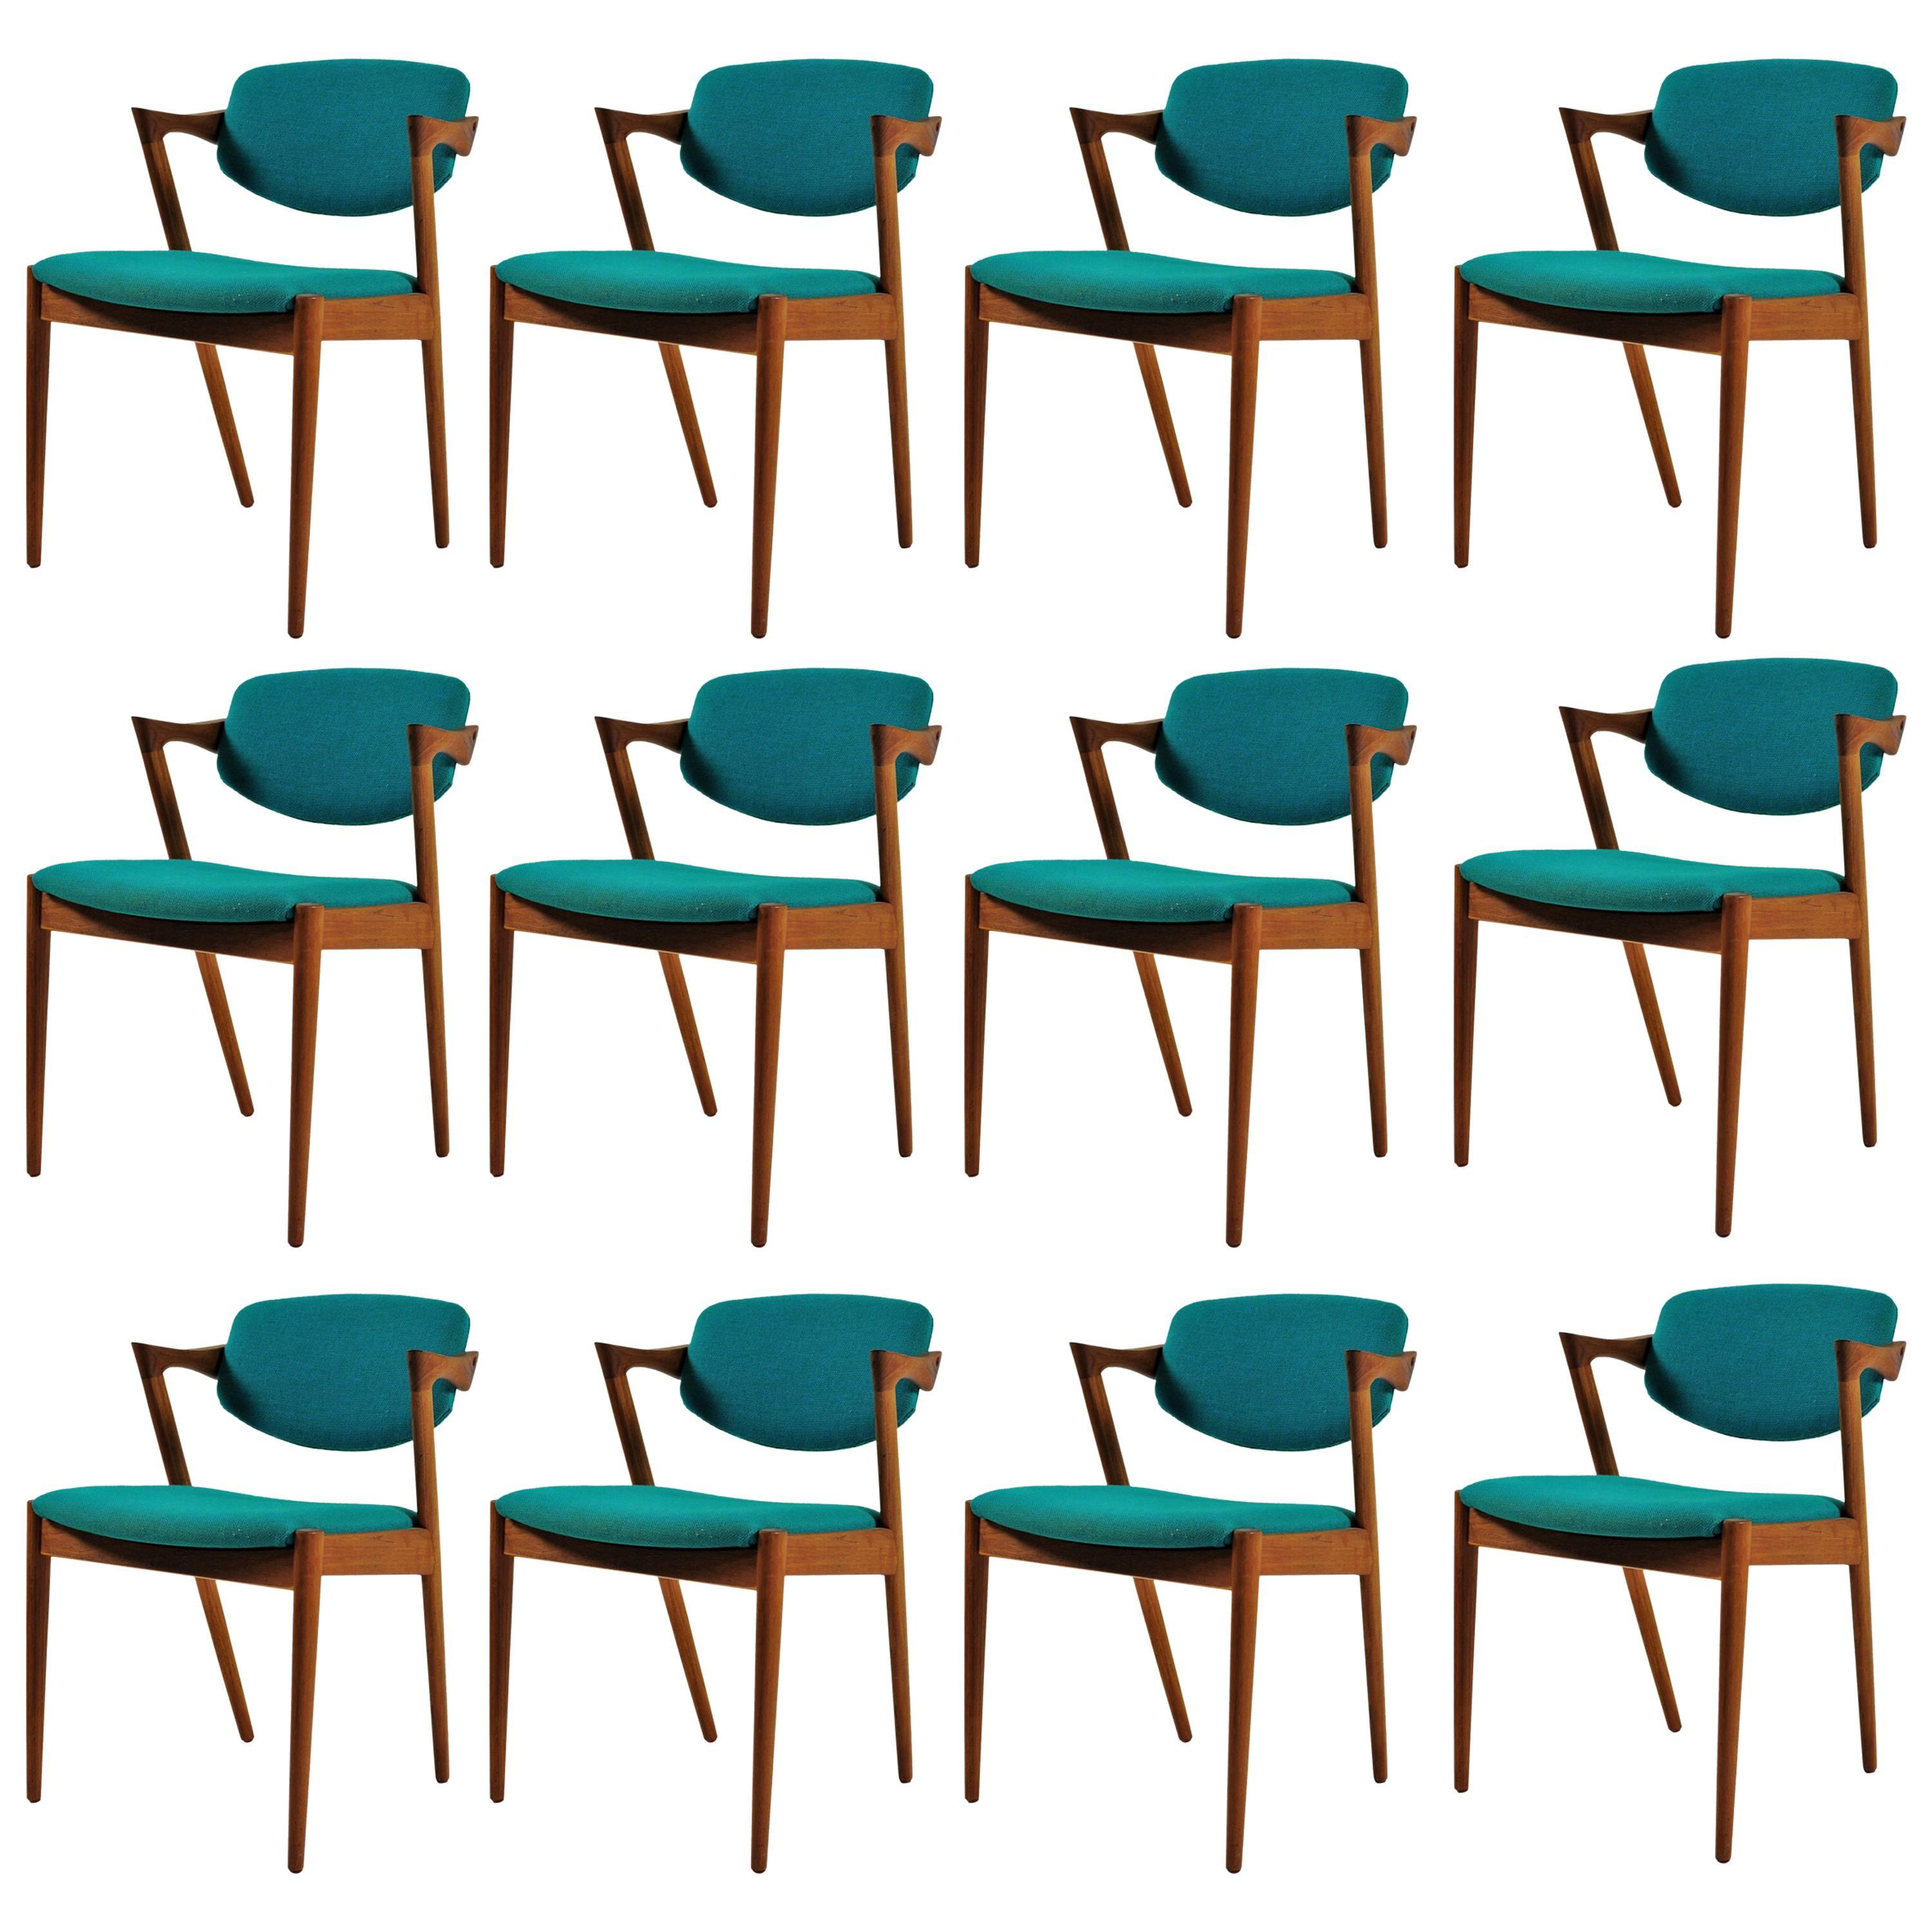 1960s Kai Kristiansen Set of 12 Dining Chairs in Teak, Inc. Reupholstery